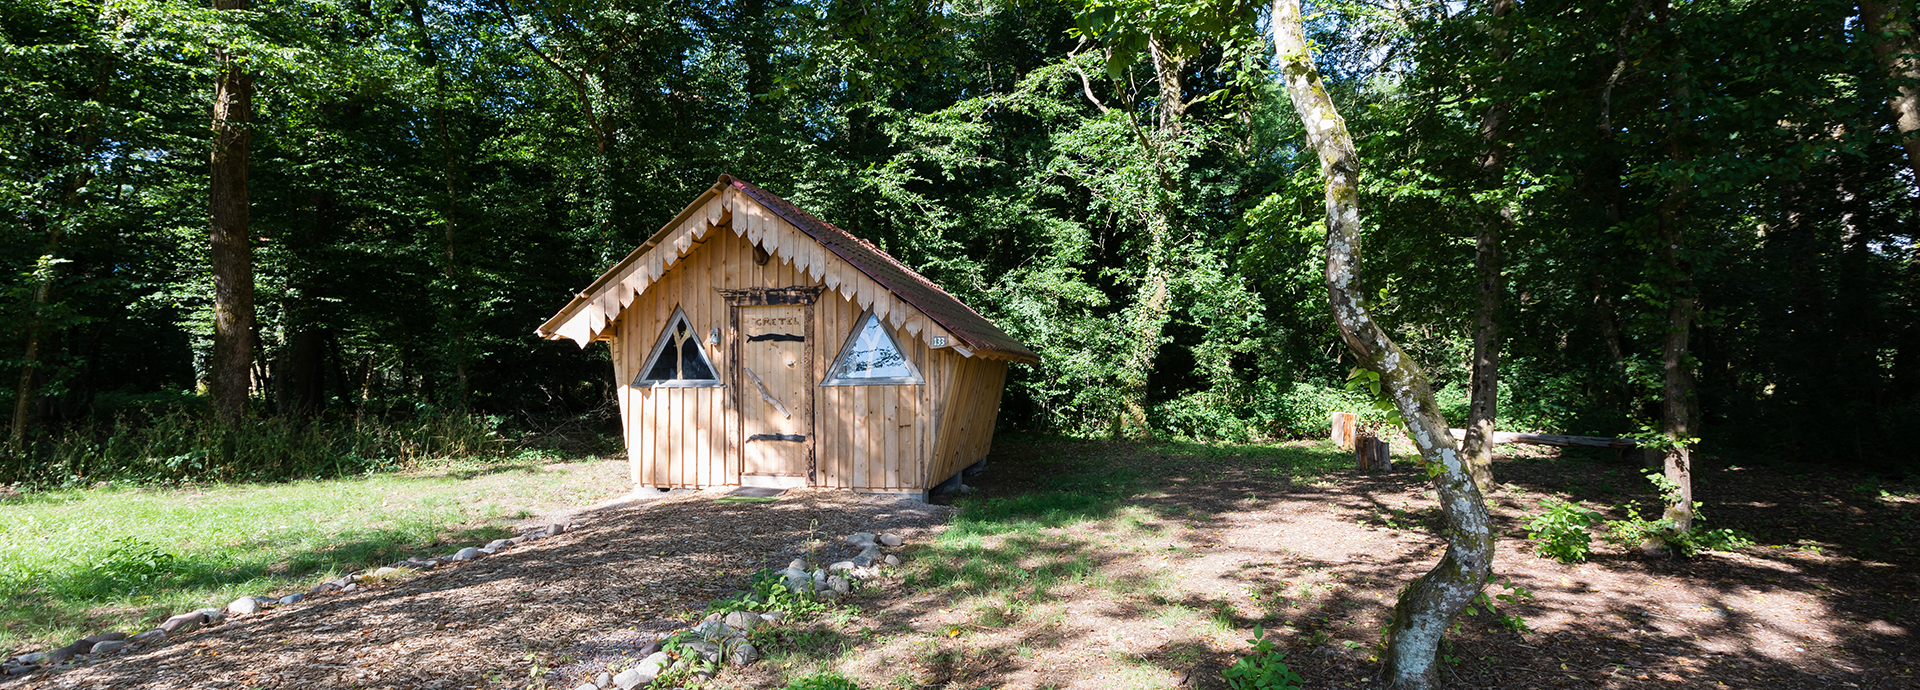 Greitel hut of the Campsite Les Castors in Alsace